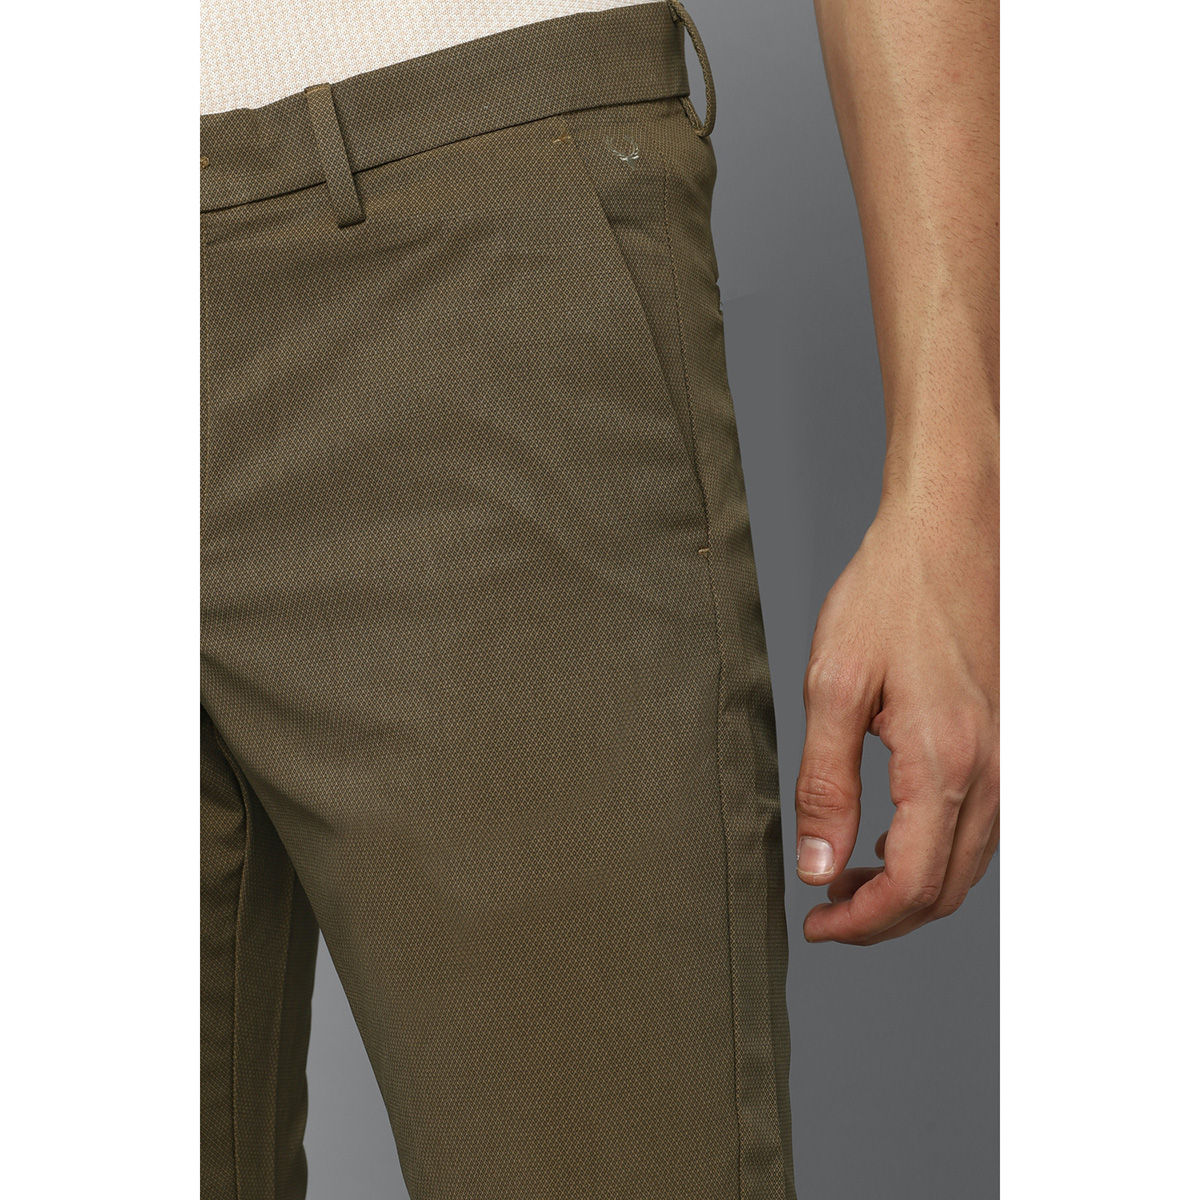 Buy Men Khaki Slim Fit Solid Casual Trousers Online - 775672 | Allen Solly